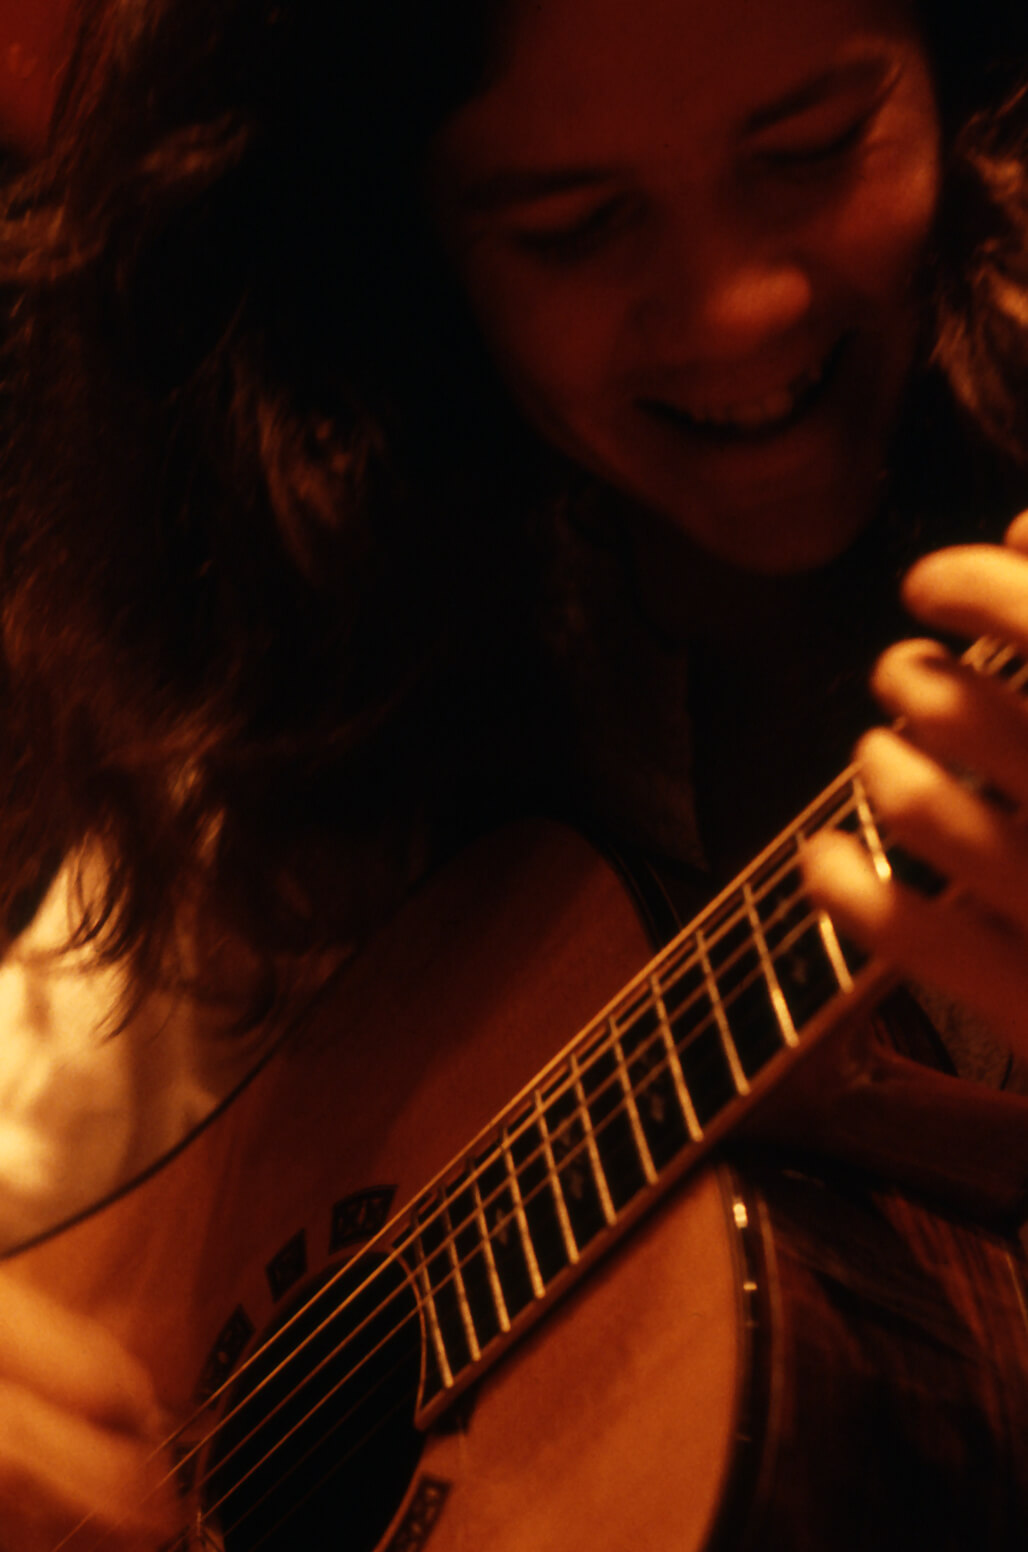 Smiling at the guitar